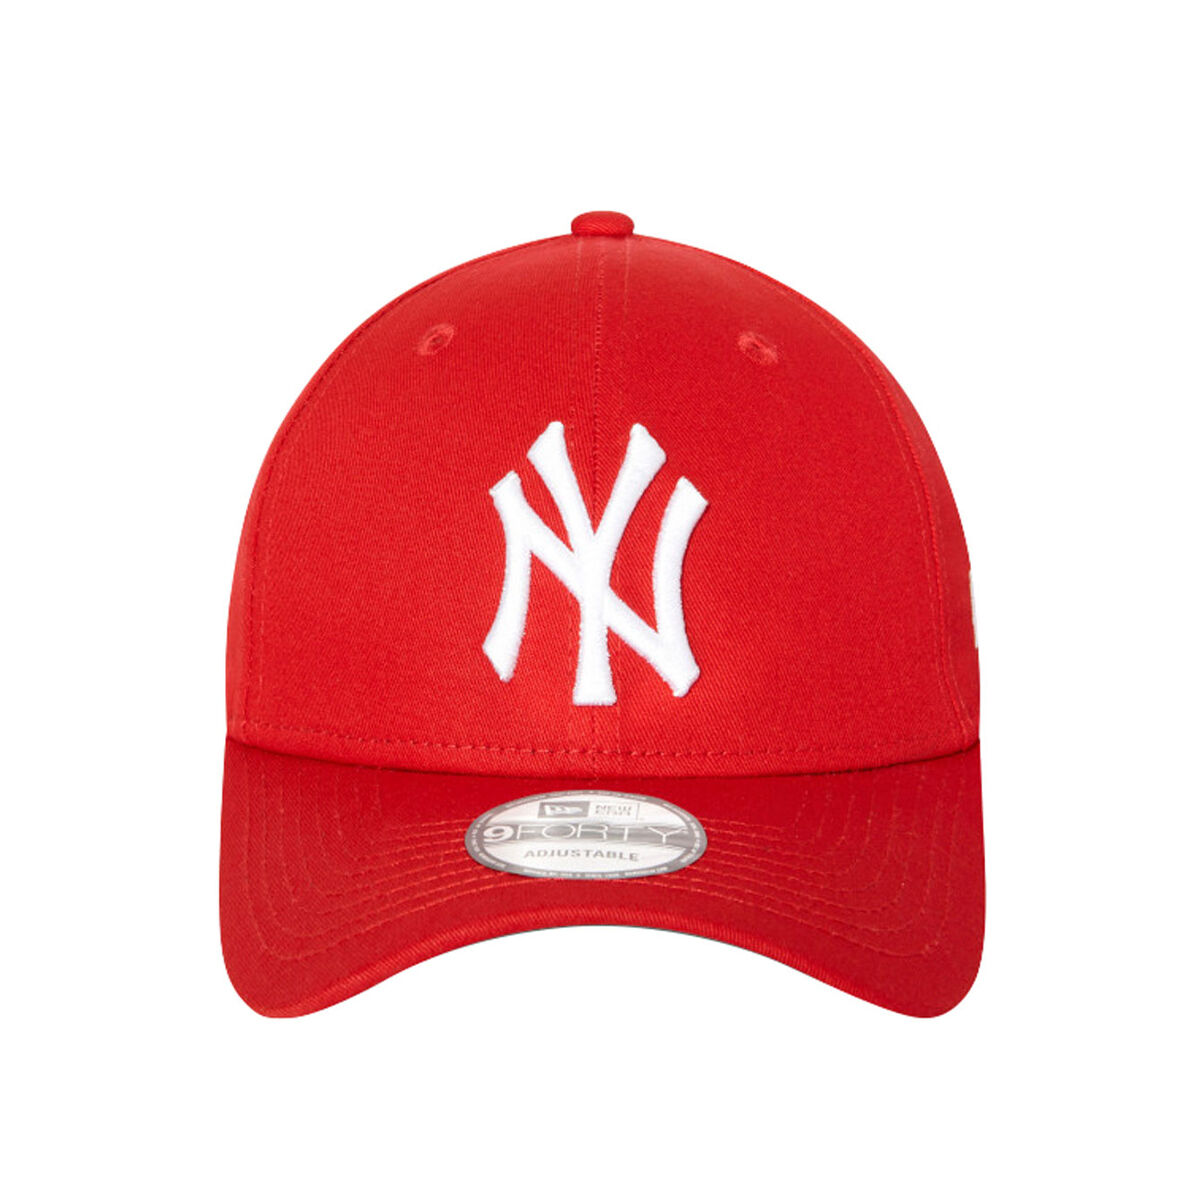 NY Yankees New York Dog Baseball Hat / Cap - Black